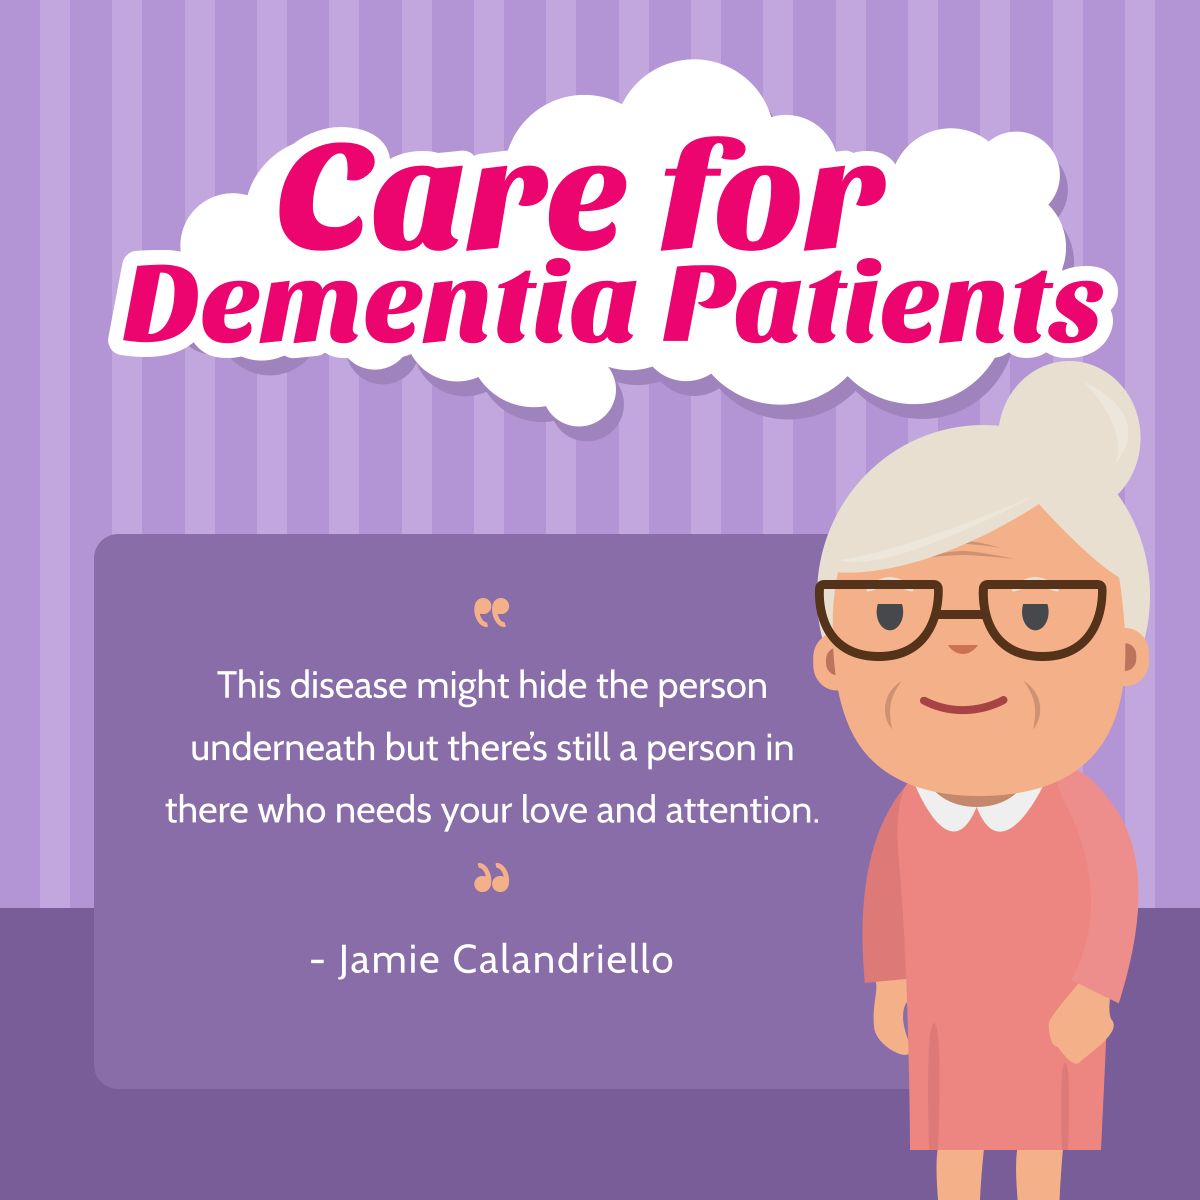 Care for Dementia Patients #SeniorCare #Dementia